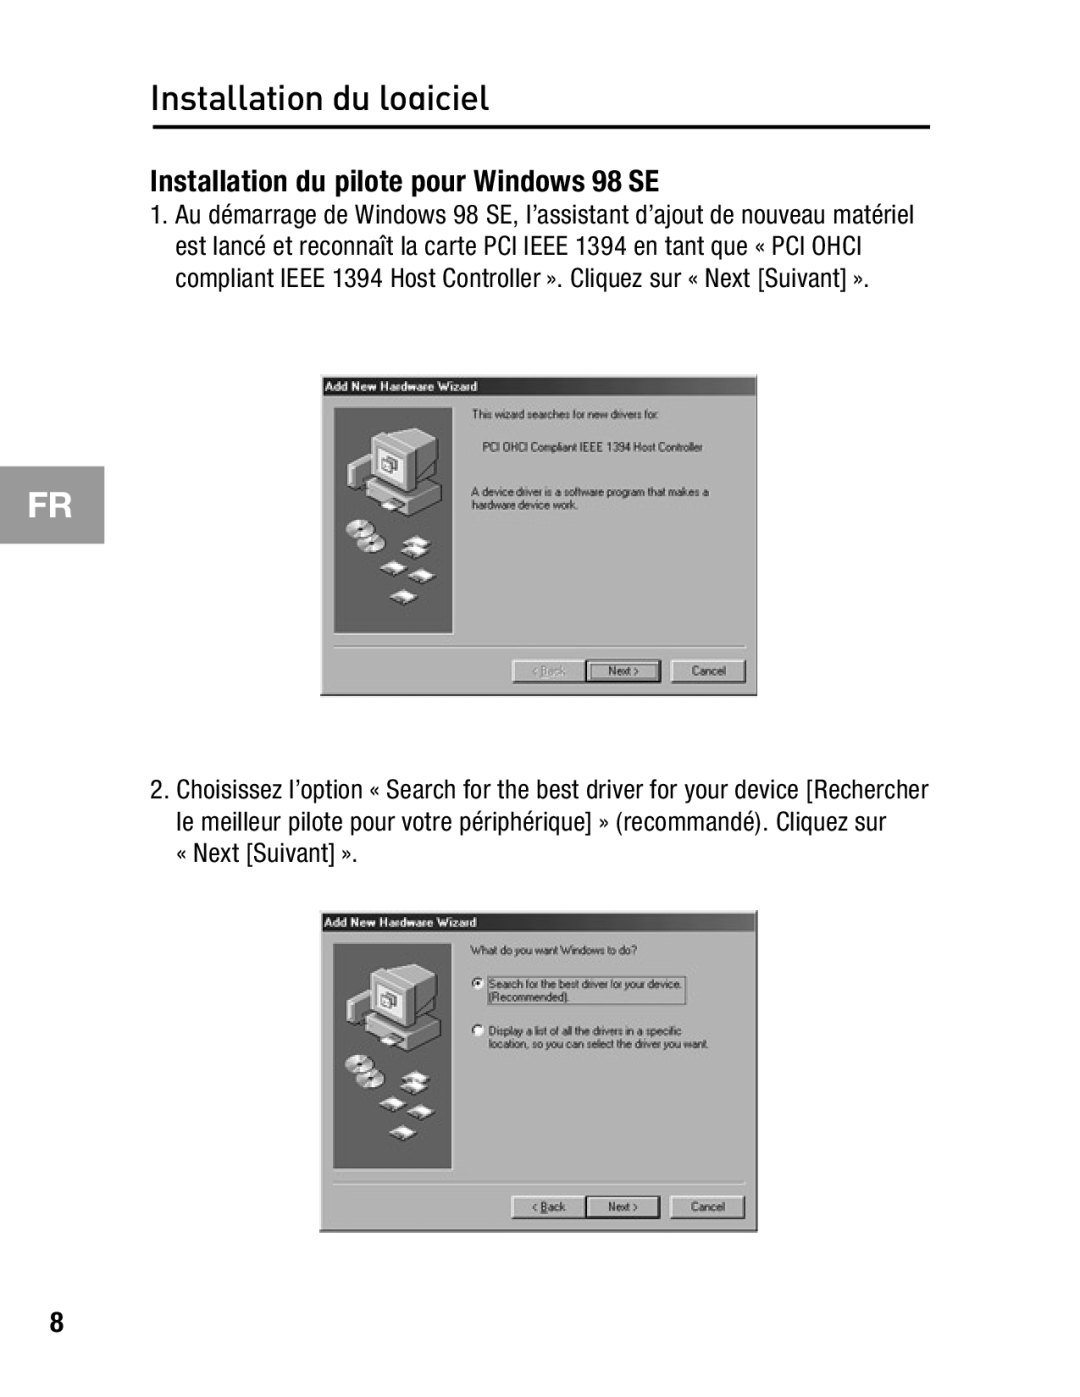 Belkin F5U503, F5U502 user manual Installation du logiciel, Installation du pilote pour Windows 98 SE, « Next Suivant » 